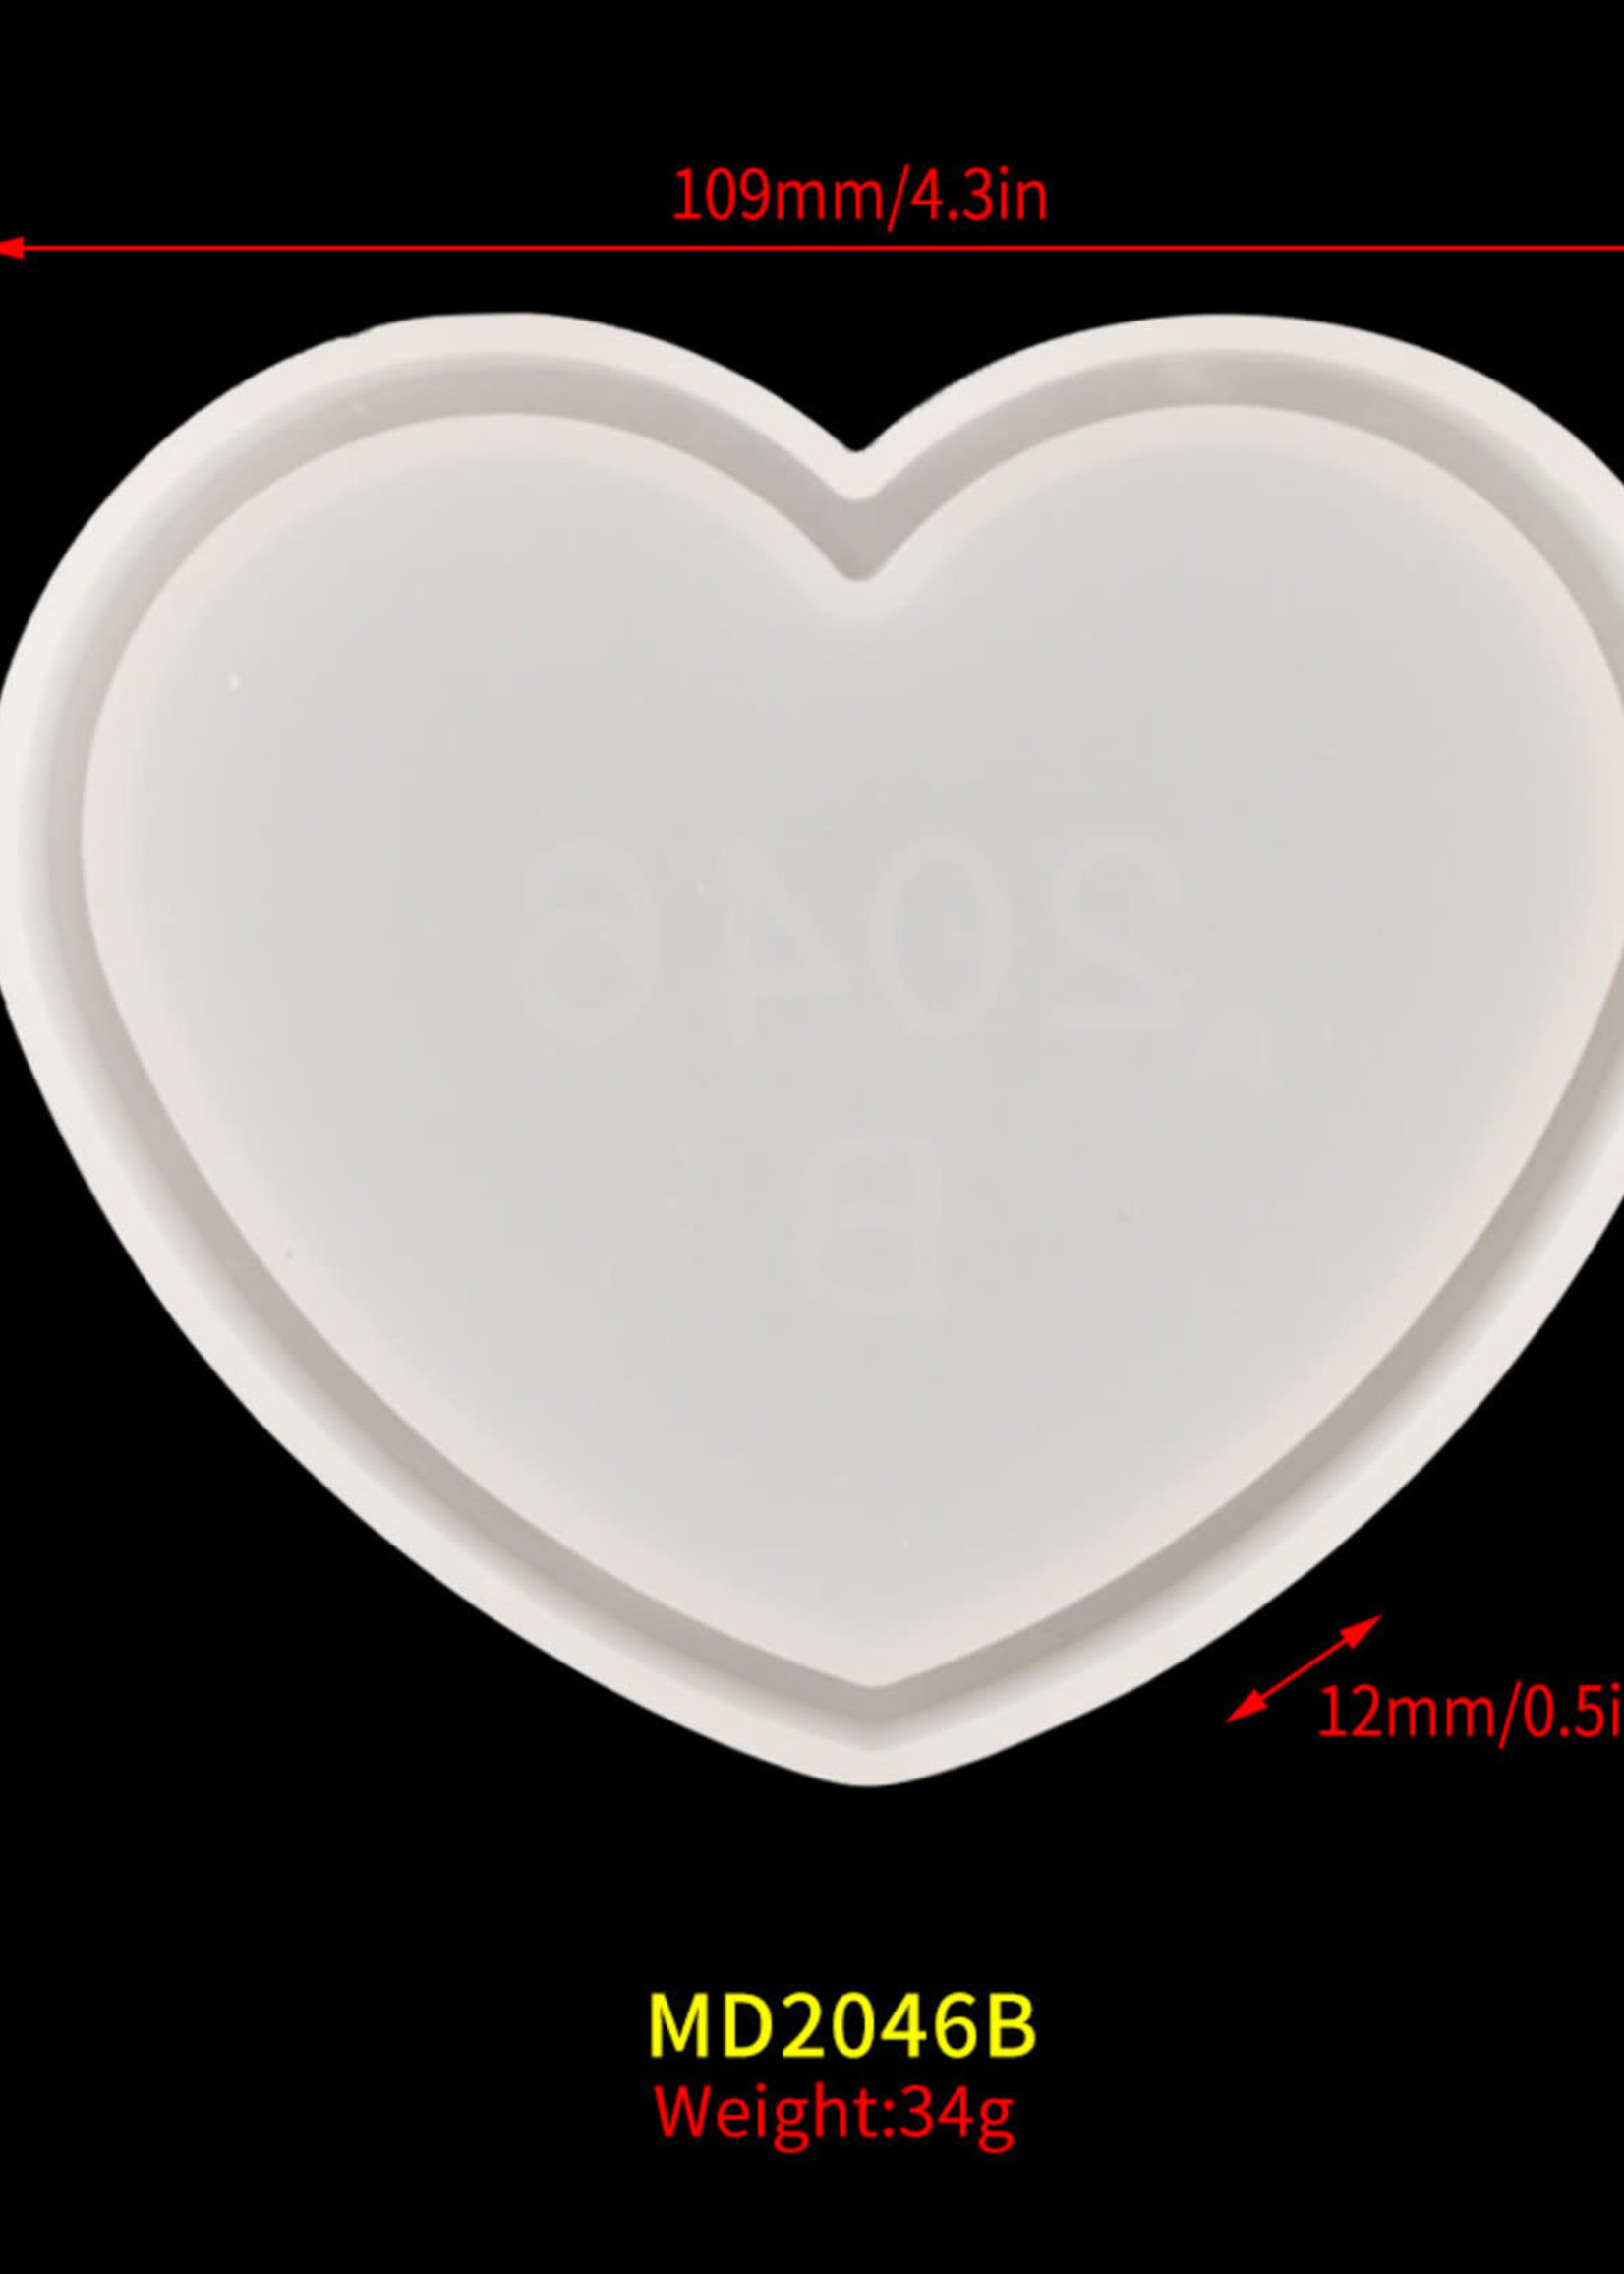 Alibaba Coaster Heart Shape MD2046B